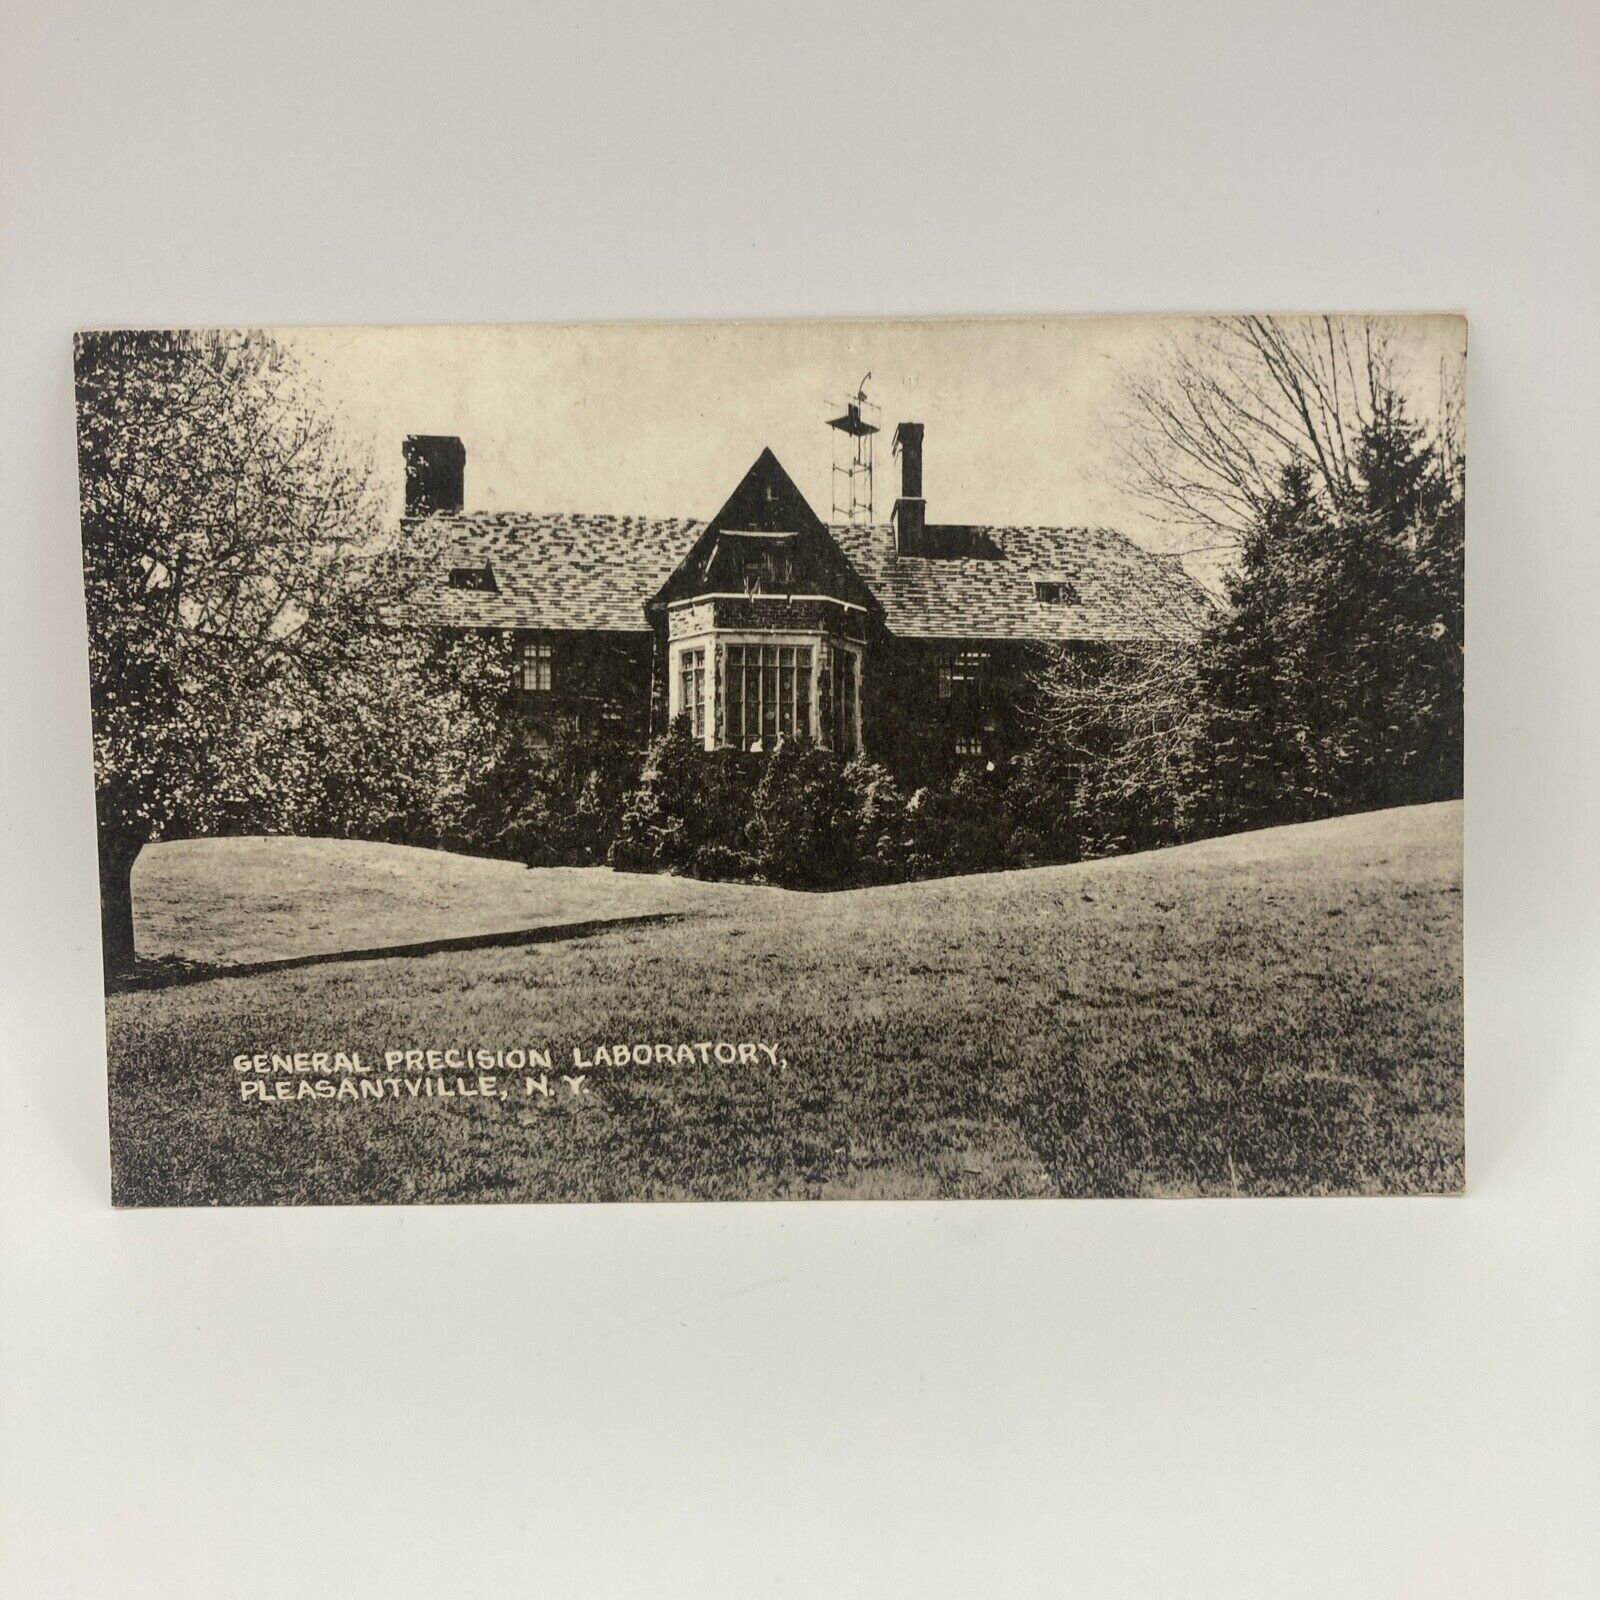 Vintage Postcard General Precision Laboratory Pleasantville, New York